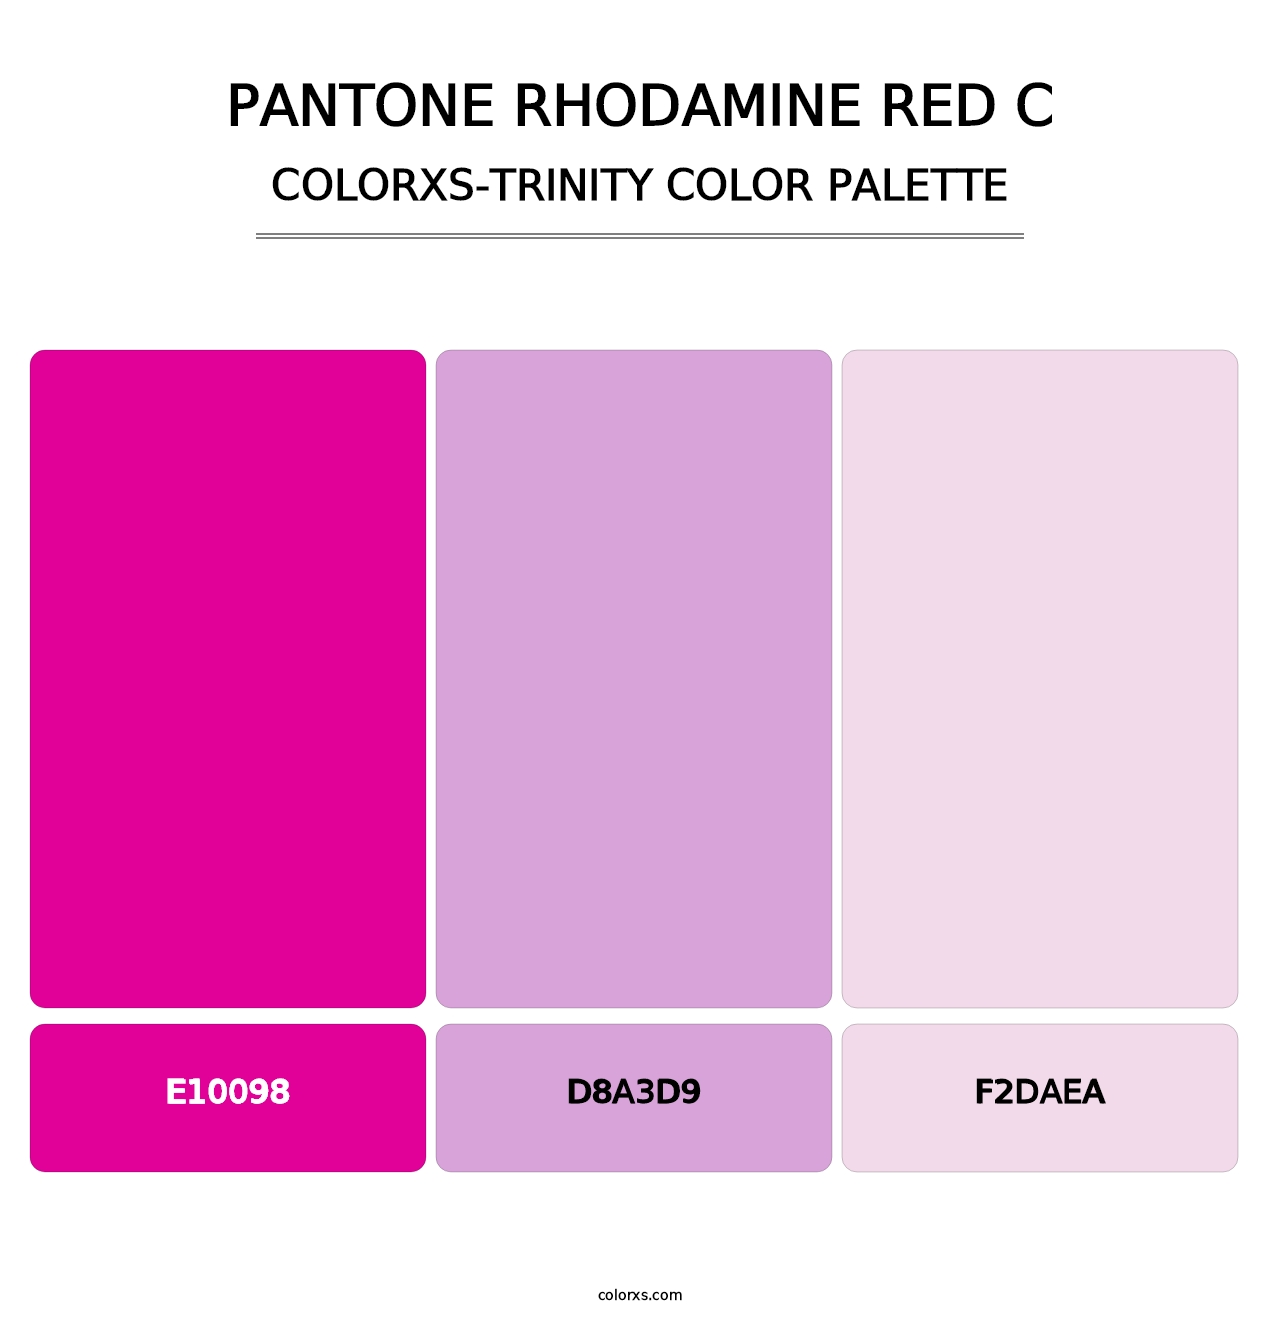 PANTONE Rhodamine Red C - Colorxs Trinity Palette